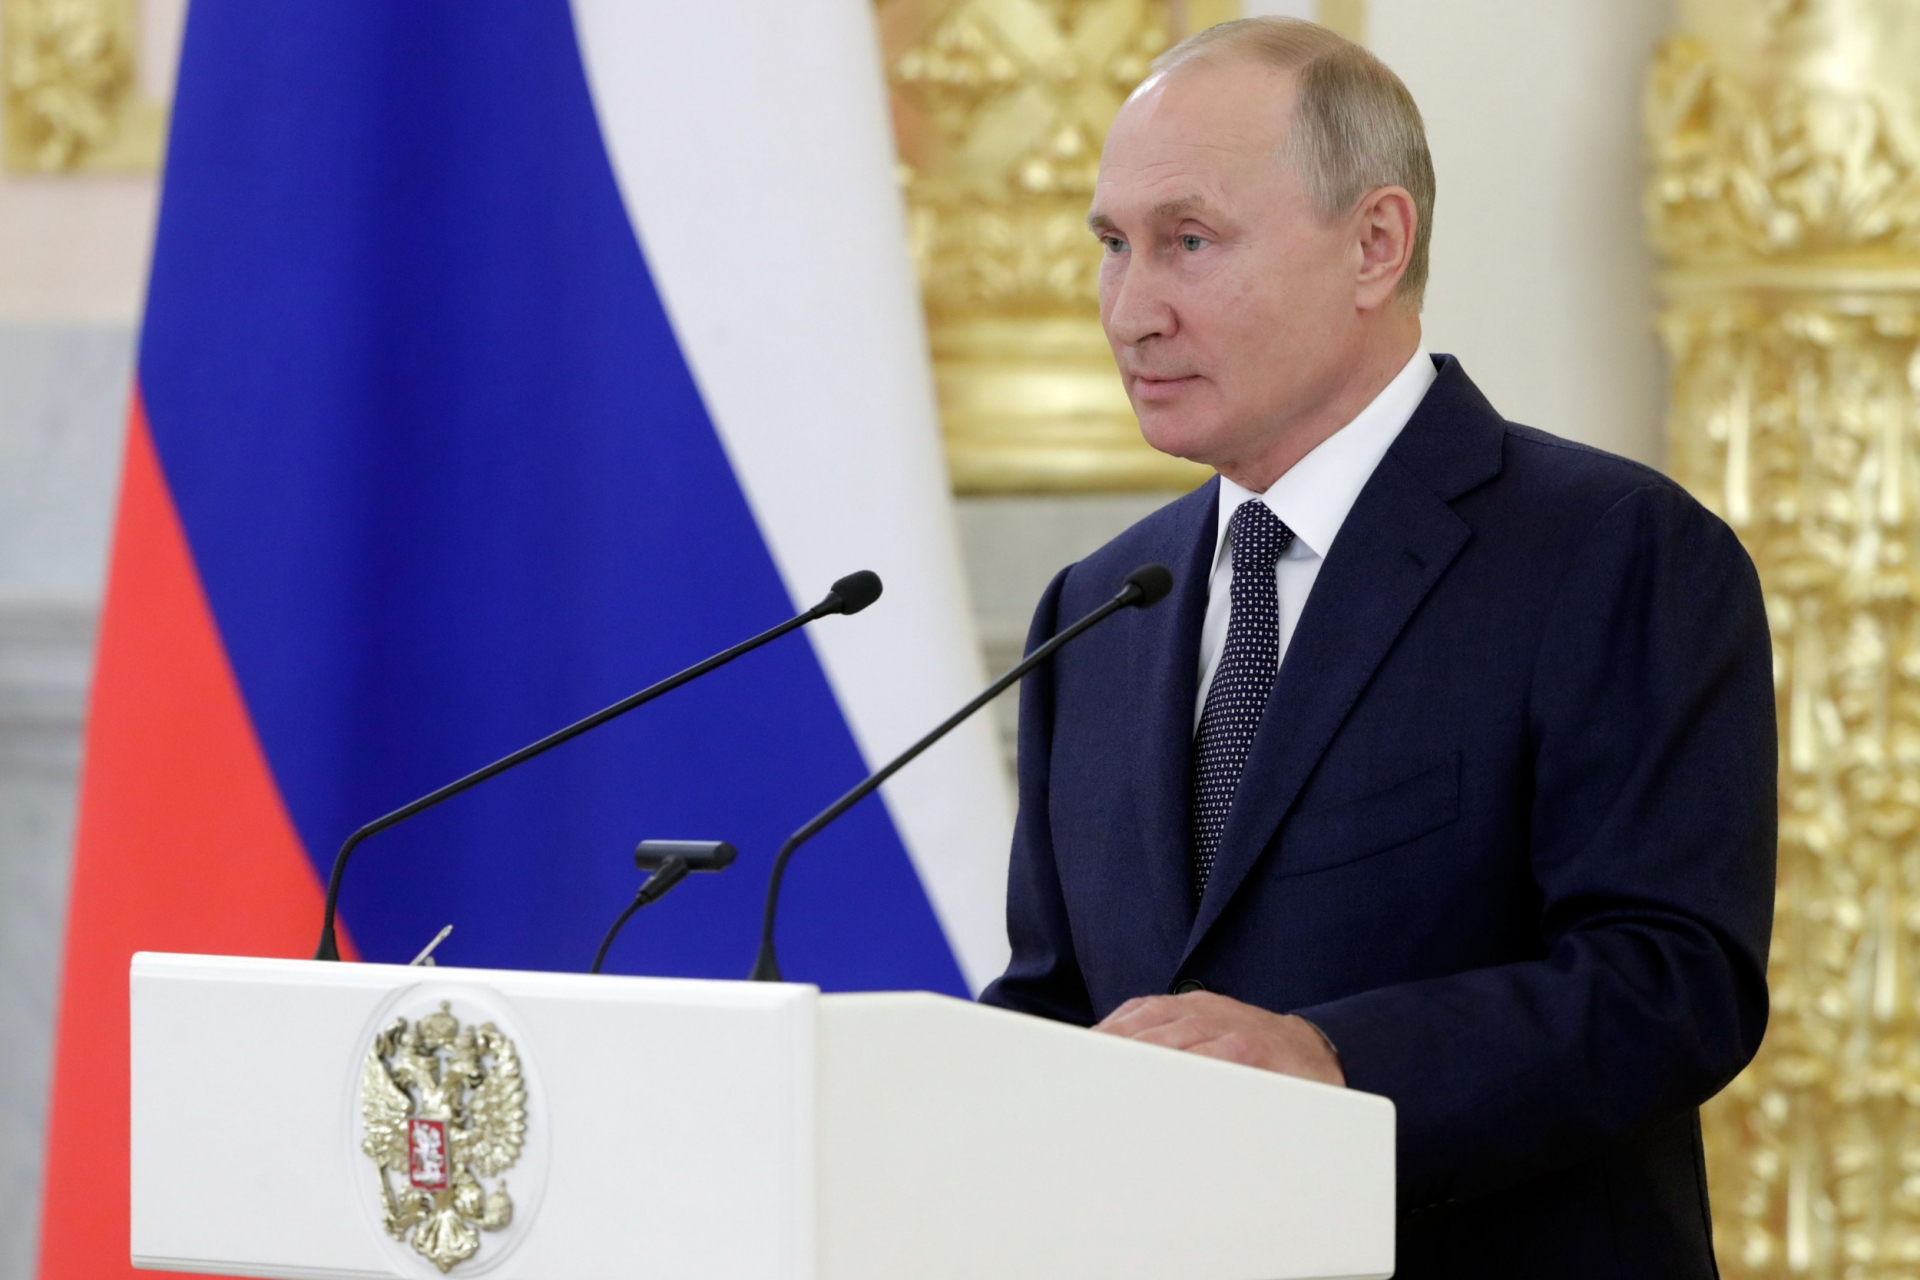 World breaking news today (September 25): Vladimir Putin nominated for Nobel Peace Prize